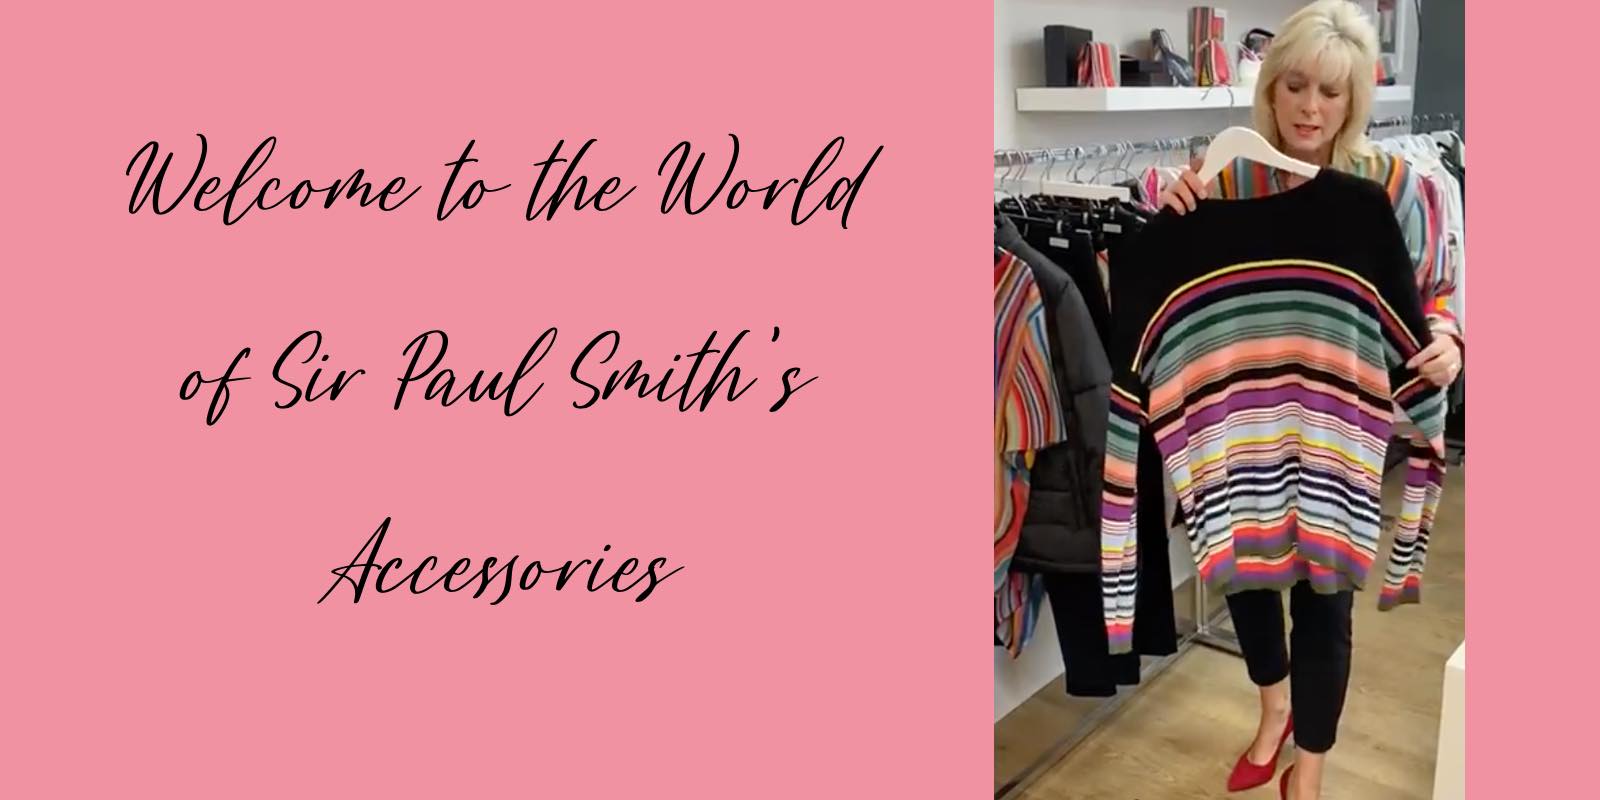 Spotlight on Paul Smith Accessories at Izzi's